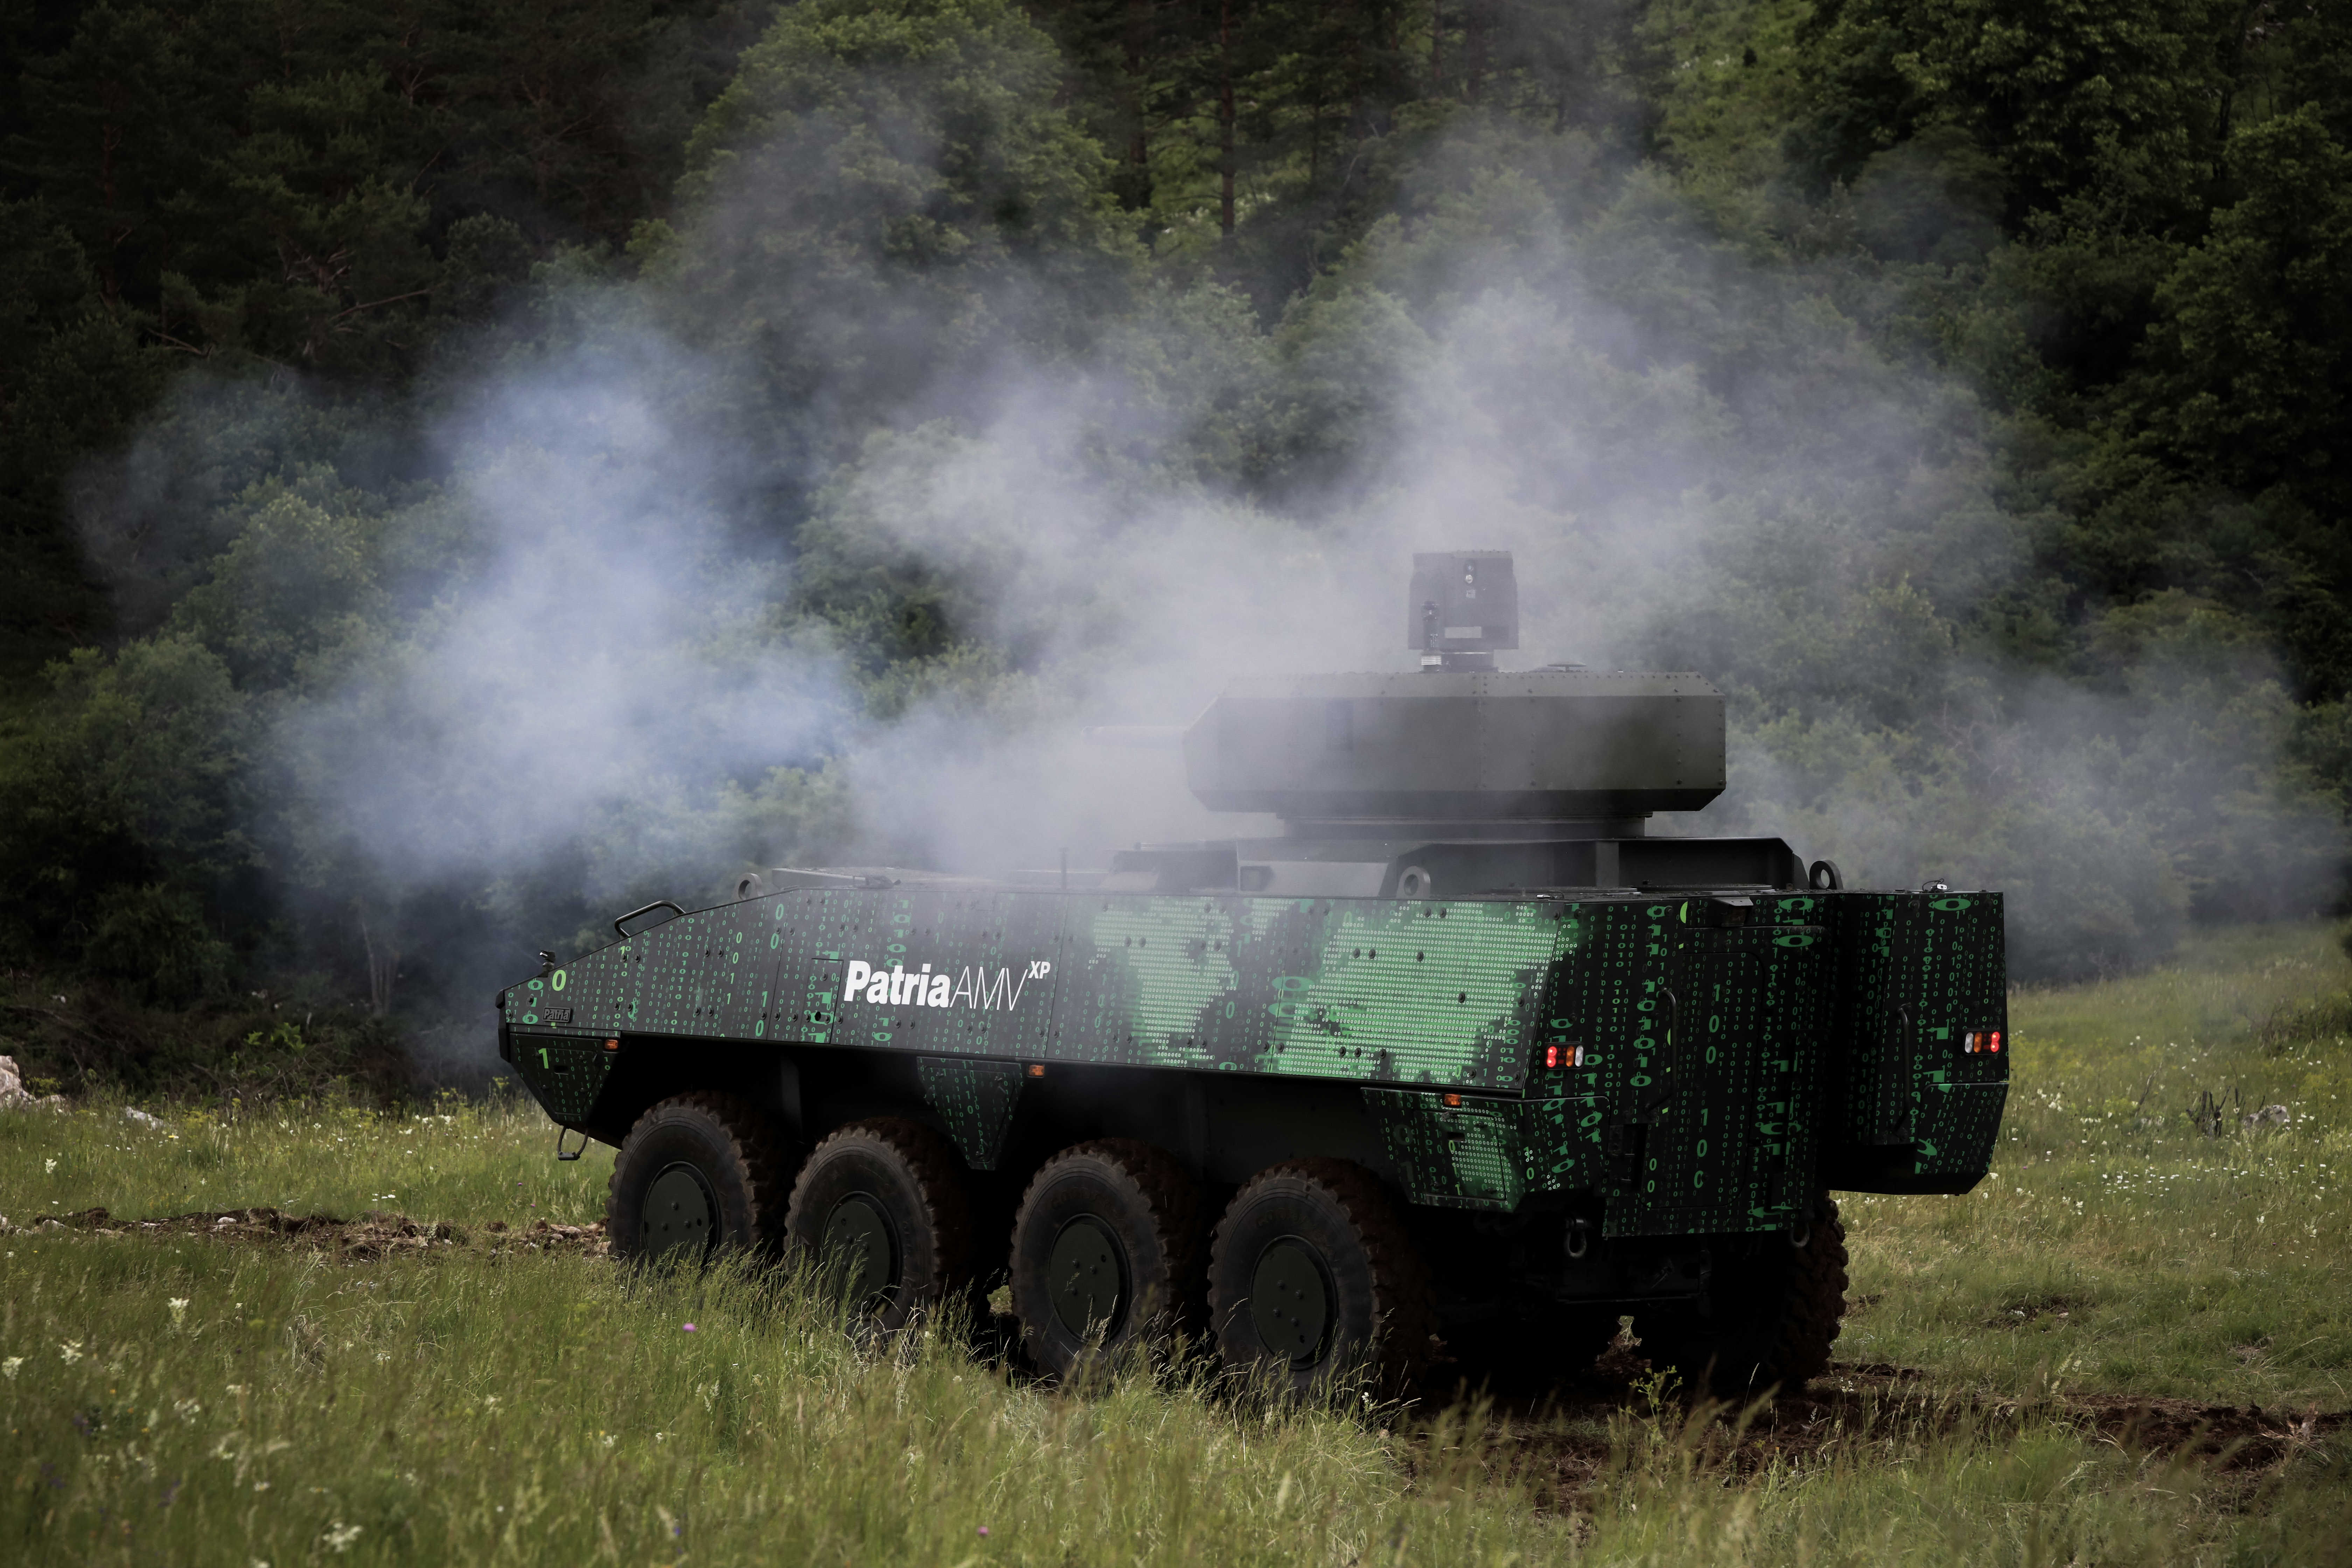 Patria’s AMV 8x8 wheeled armored vehicle